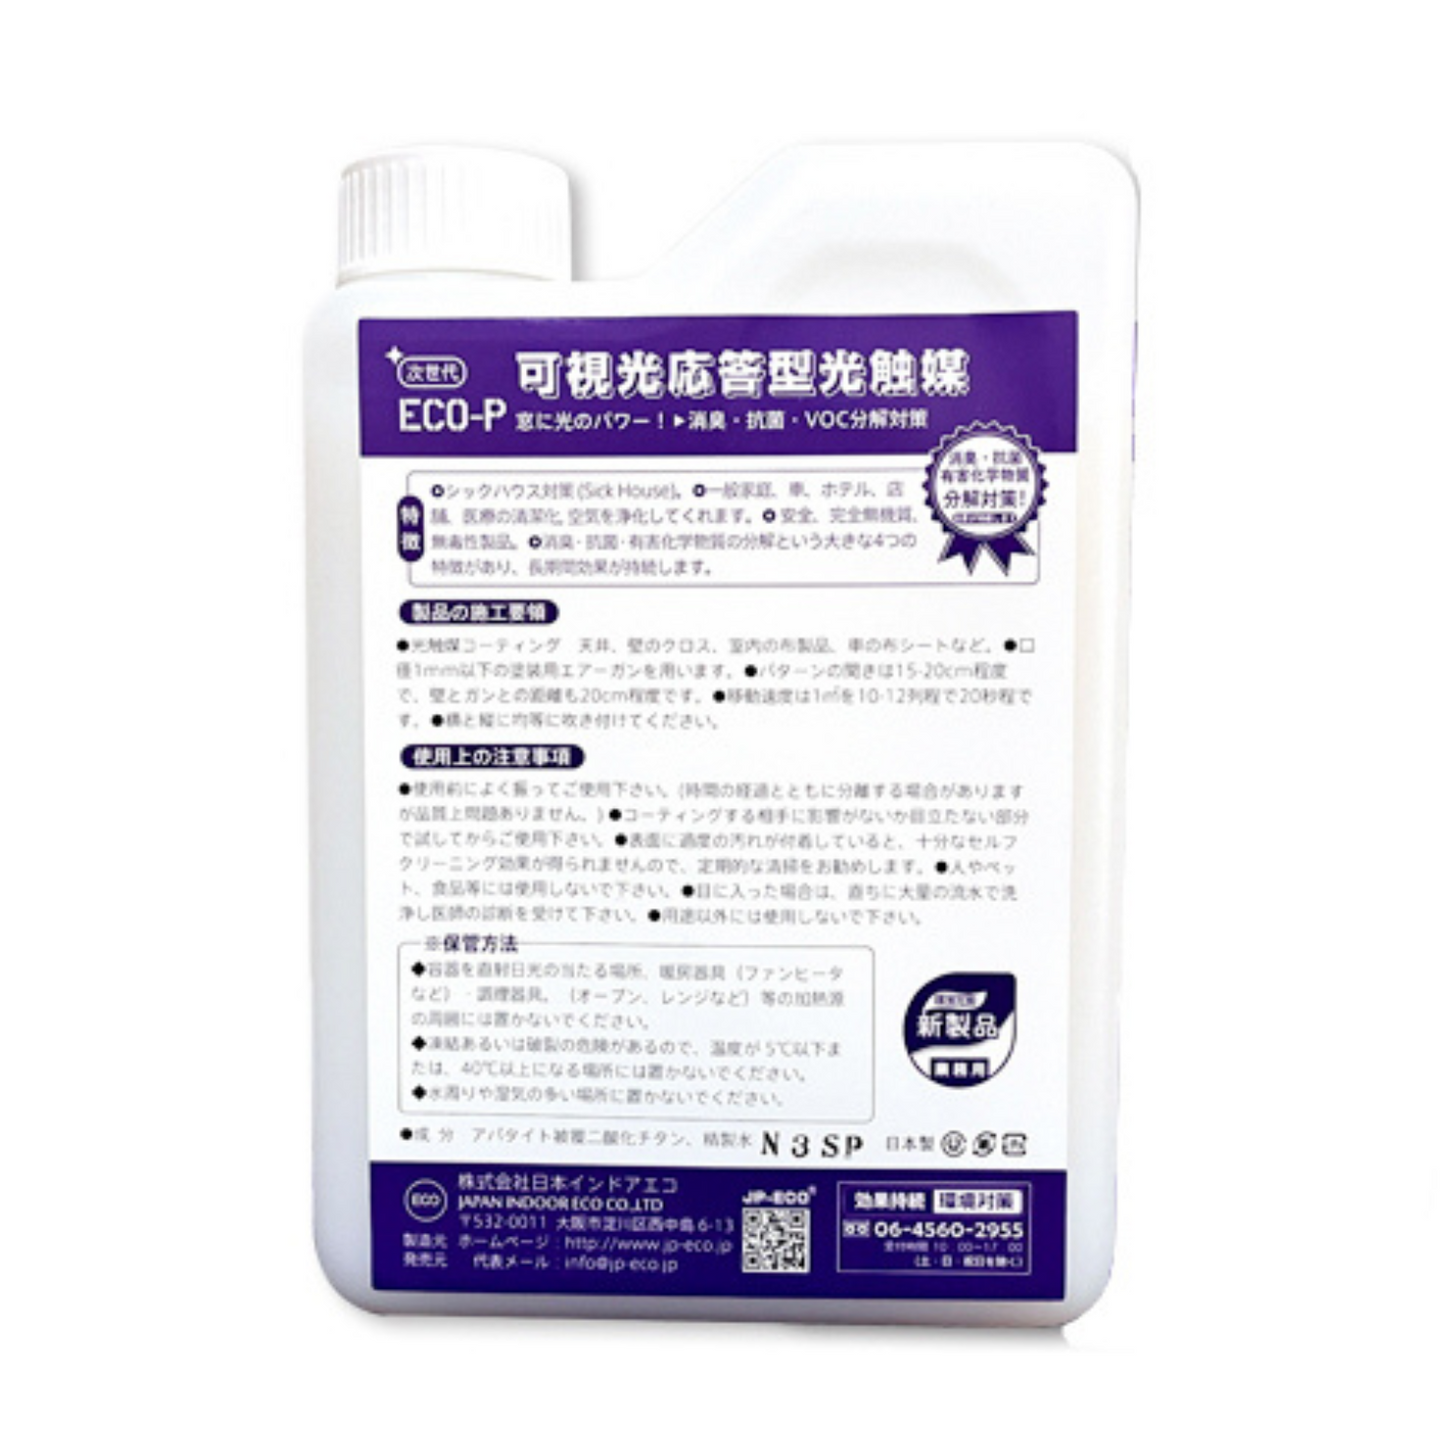 DASH JP-ECO【日本原裝】ECO-P 光觸媒 高活性可視光應答型甲醛清除劑 (1kg) 強力型淨化噴霧劑